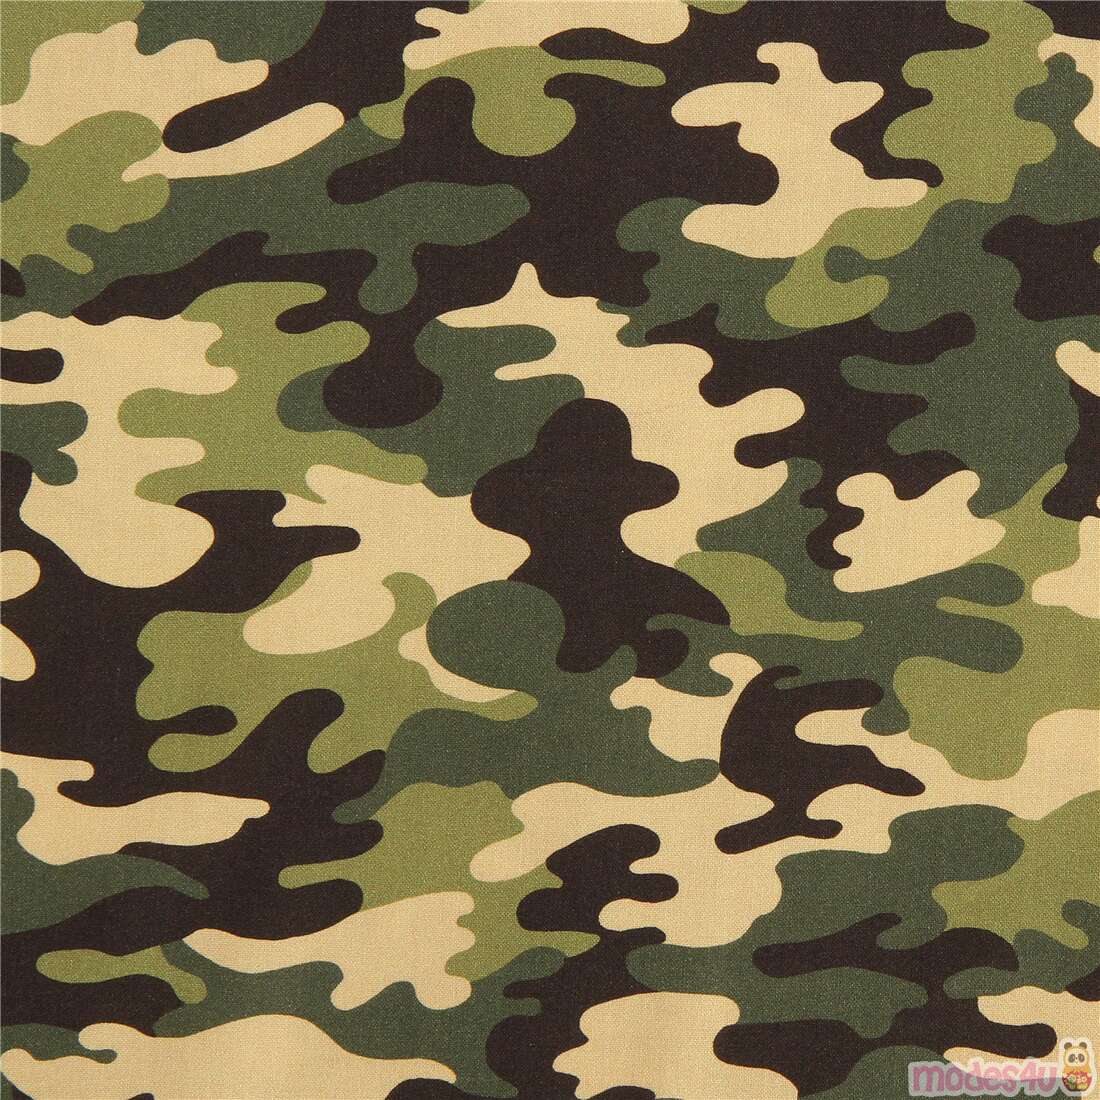 green army print cotton fabric Robert Kaufman - modeS4u